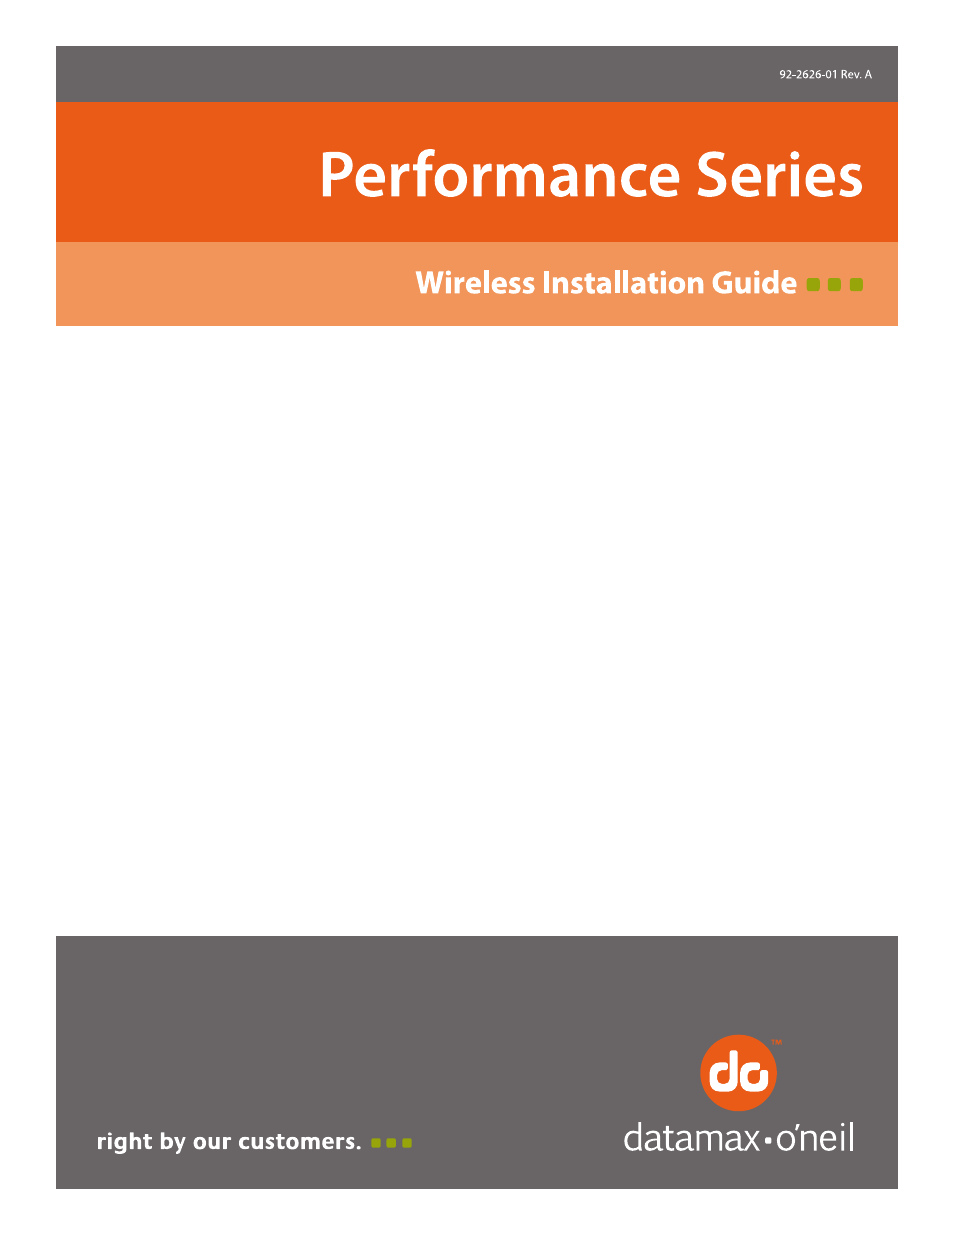 Performance series Wireless